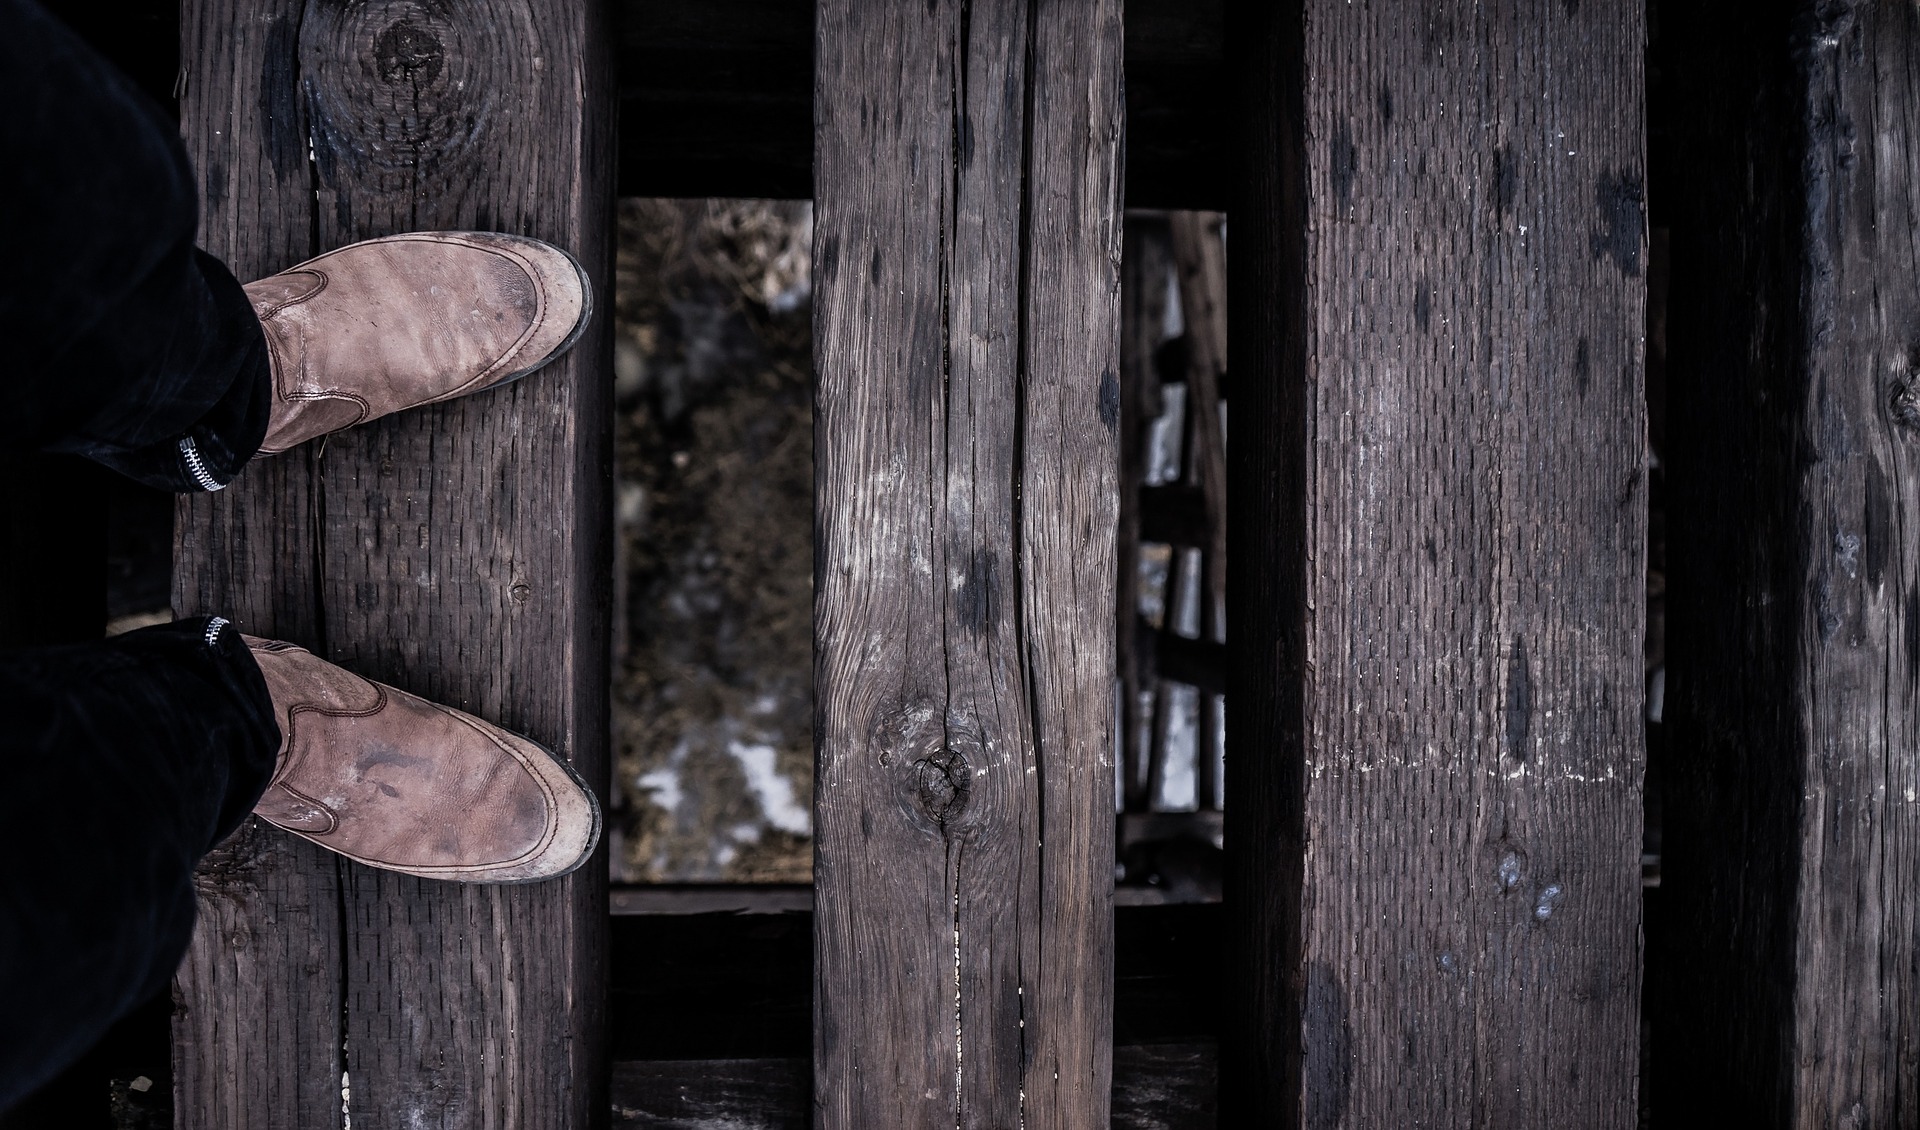 Füße auf Holzboden by pixabay